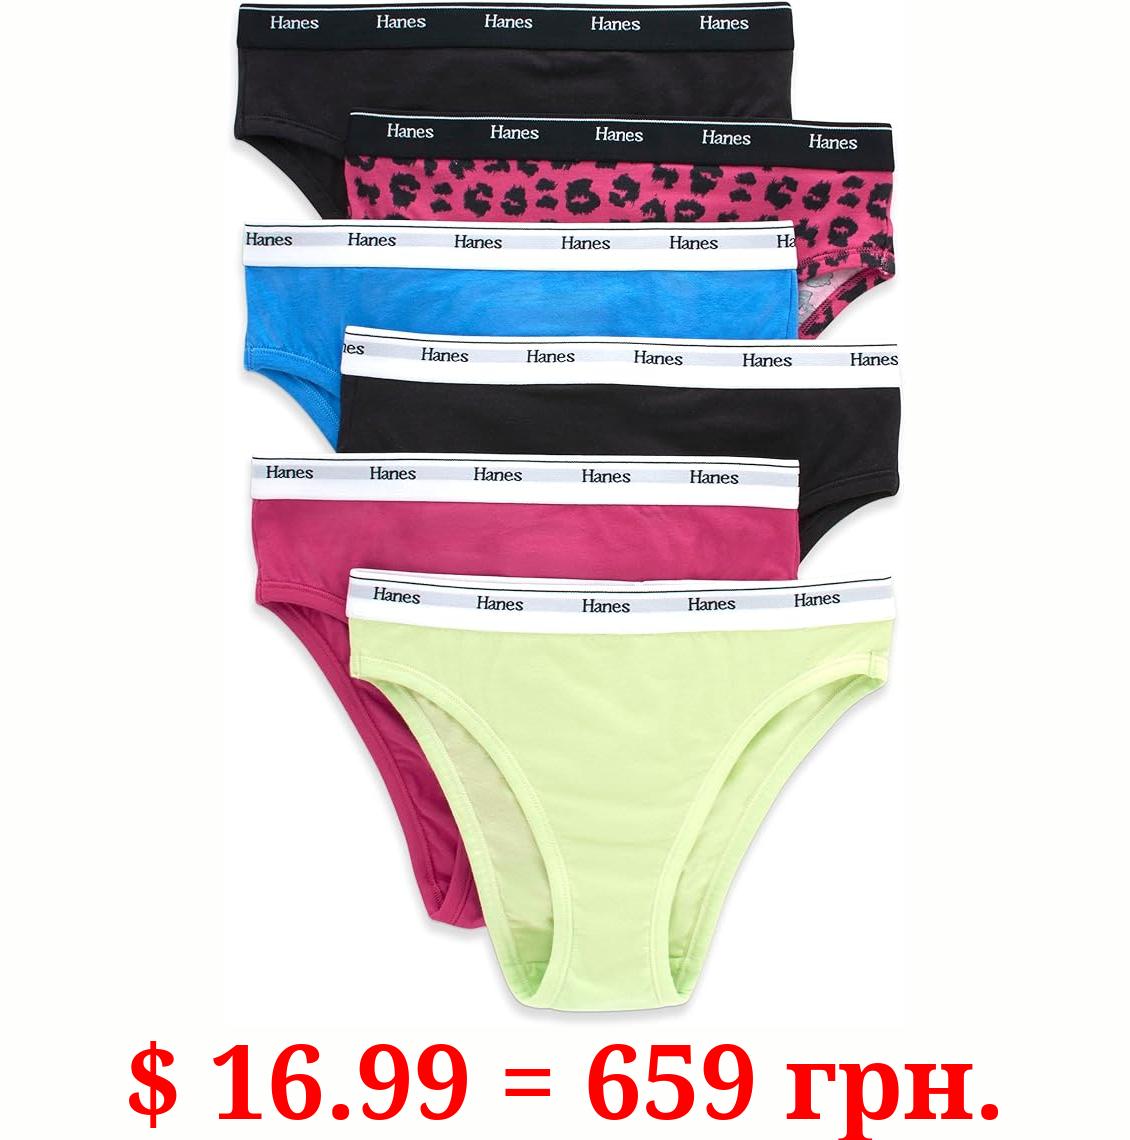 Hanes Women's Originals Hi-Leg Panties, Breathable Stretch Cotton Underwear, Assorted, 6-Pack